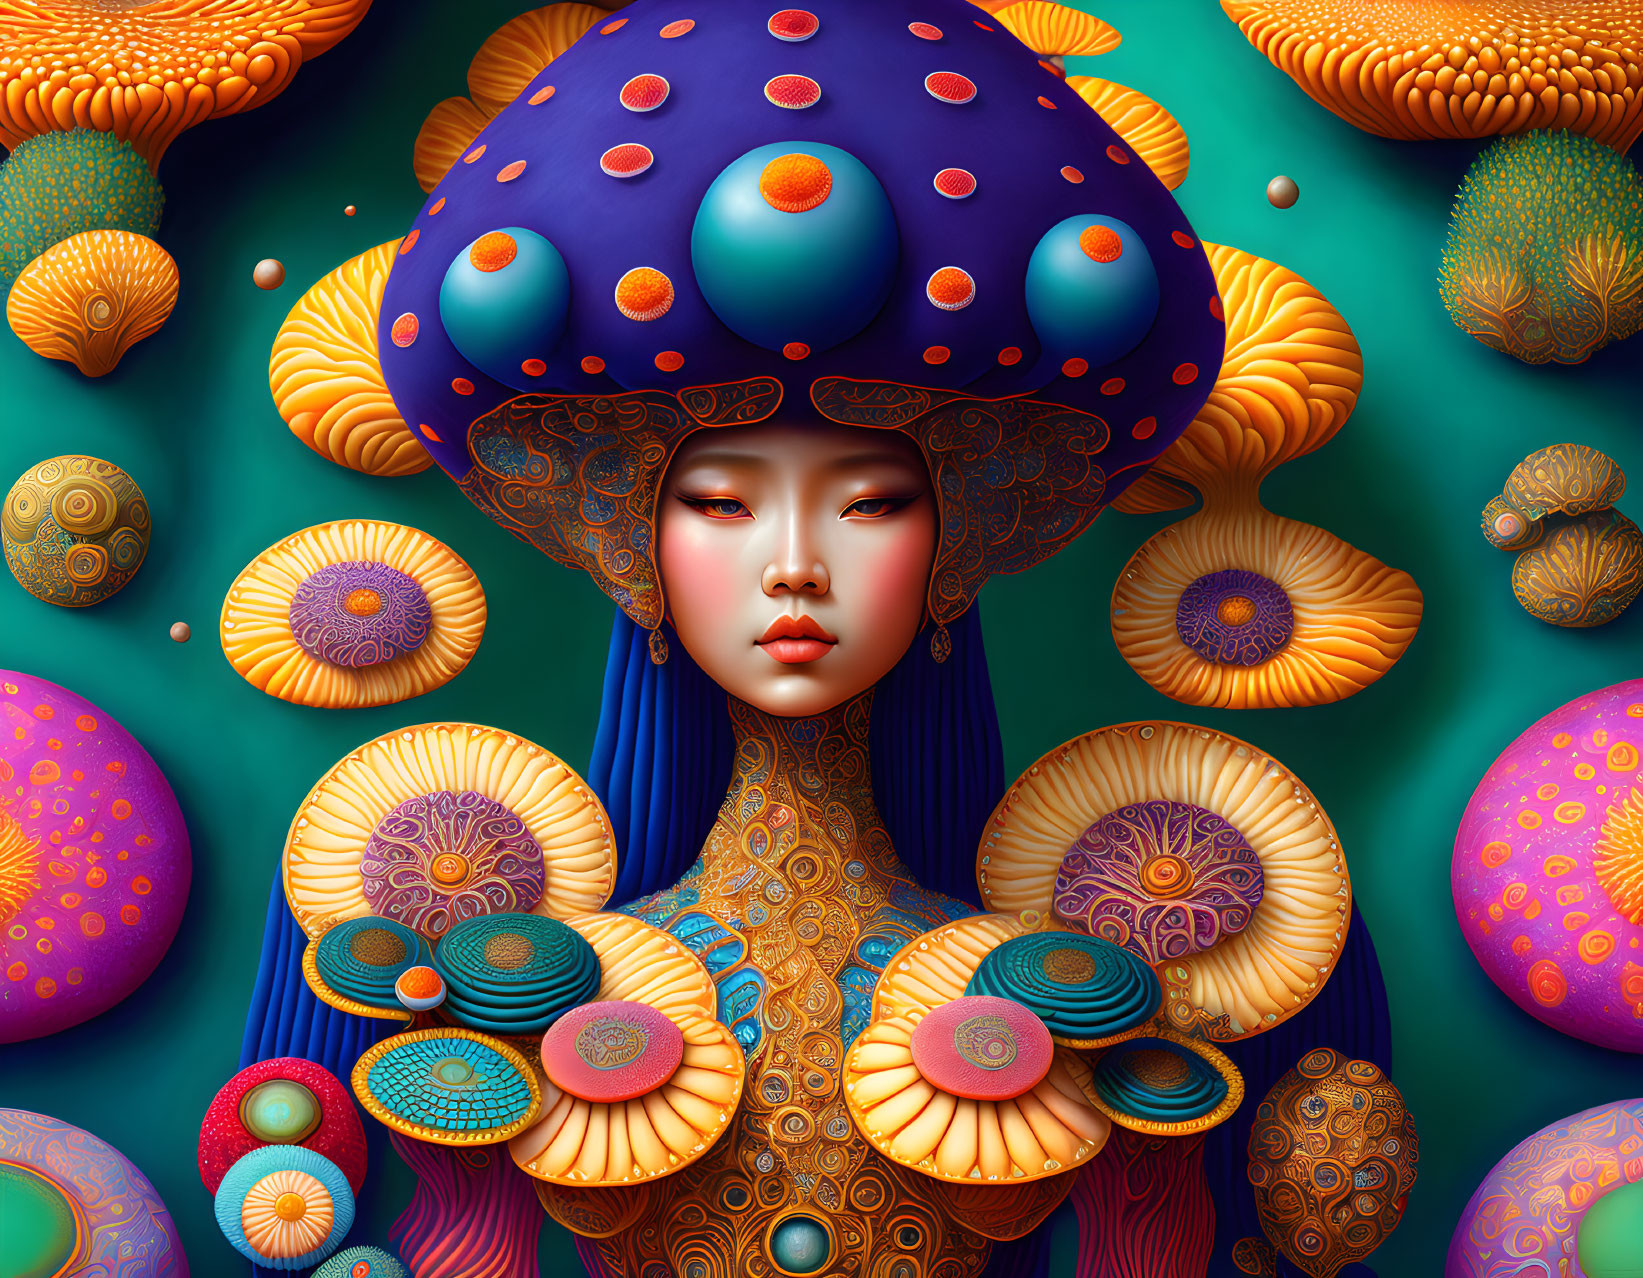 Vivid Mushroom-Themed Woman Artwork with Fantasy Background